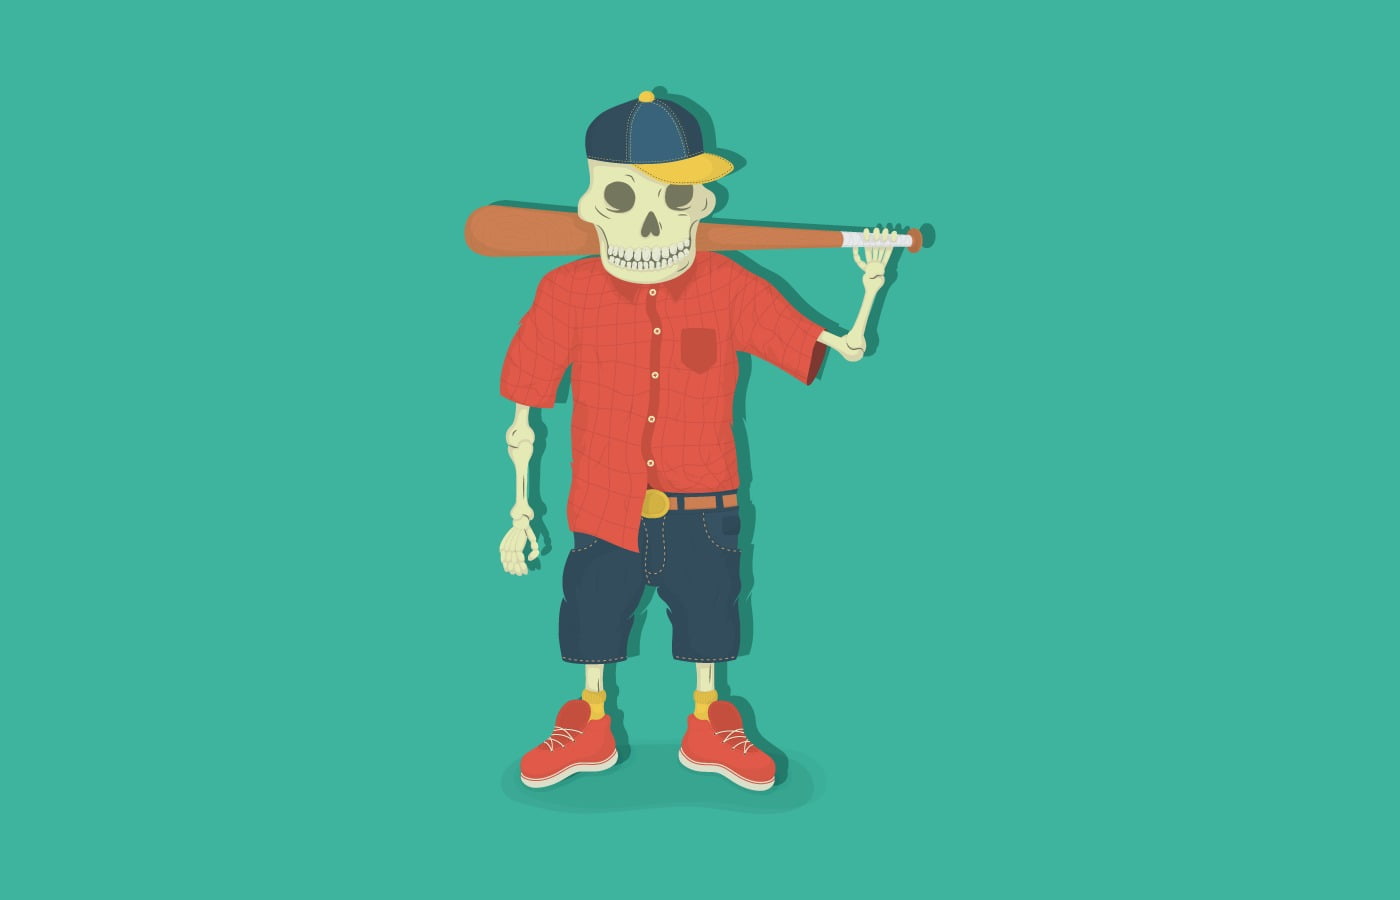 skull holding baseball bat illustration, minimalism, one person